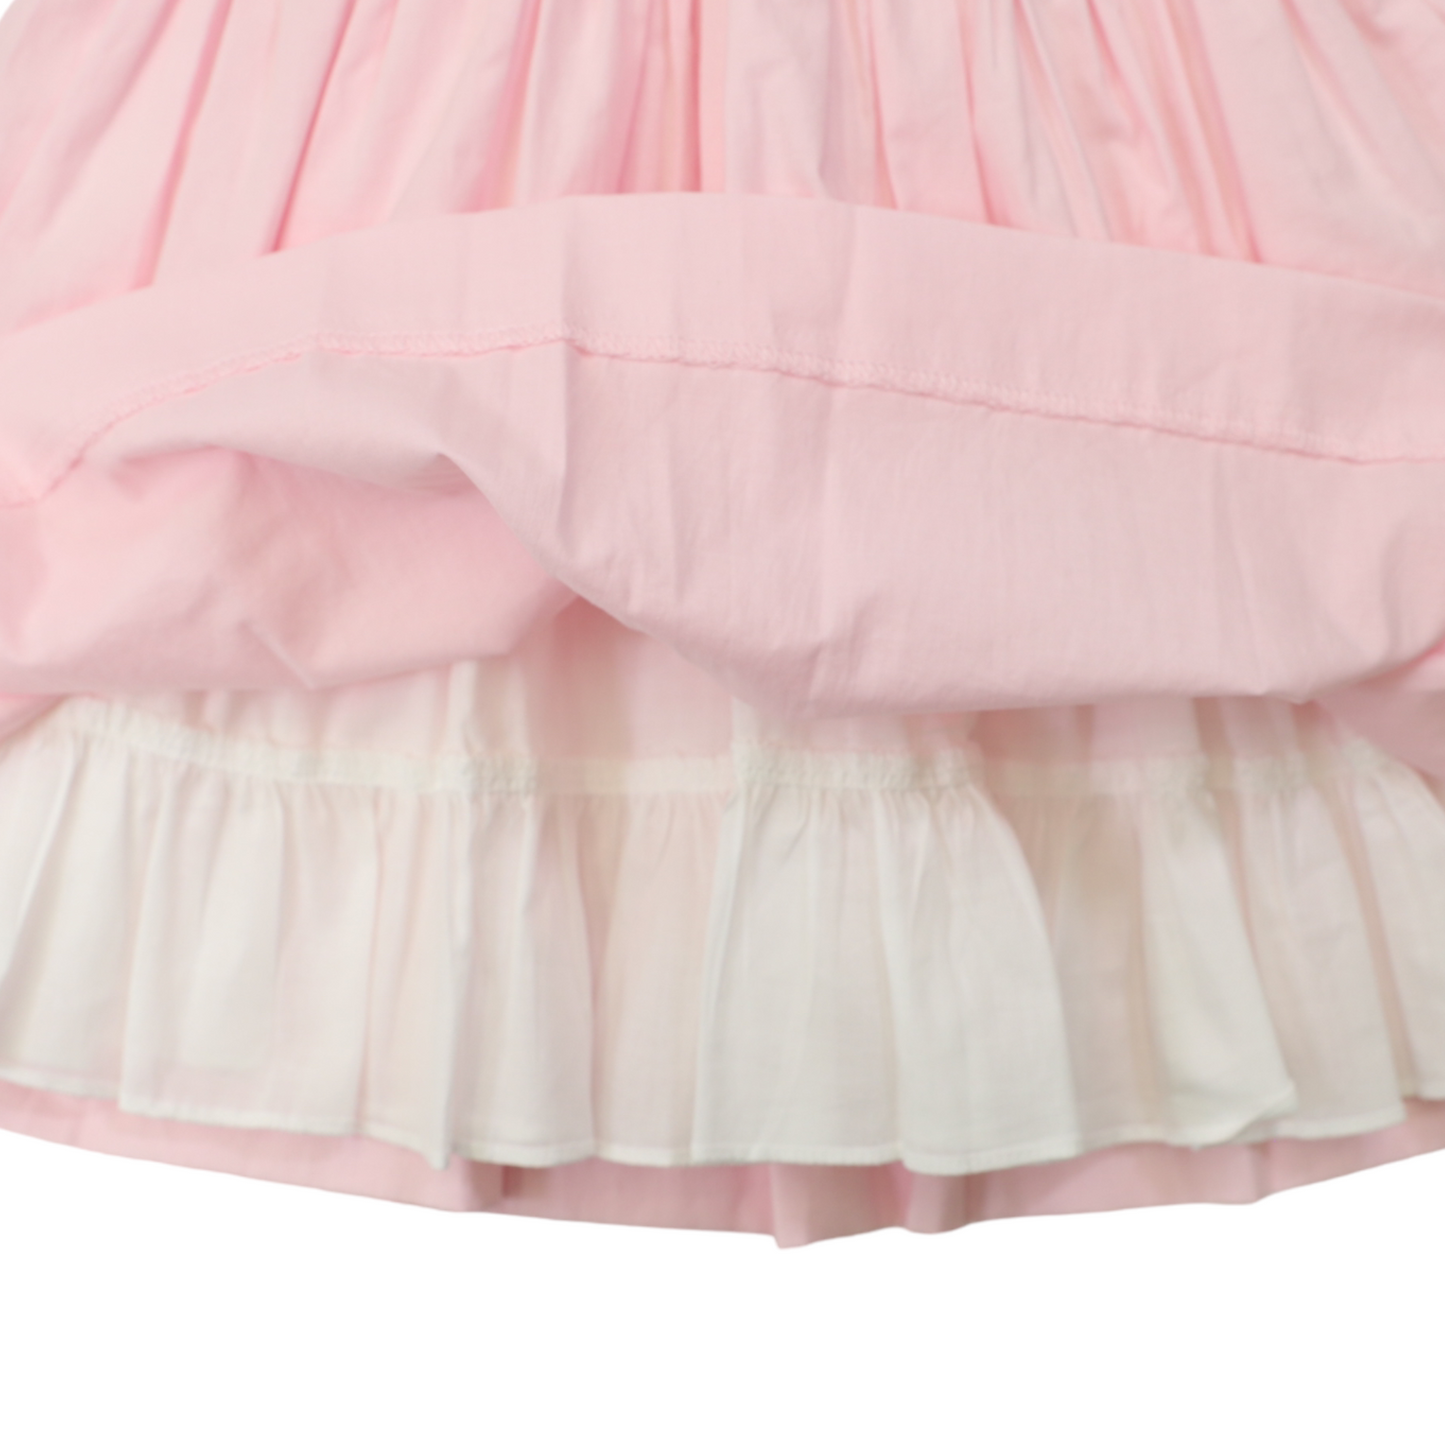 Korango Smocked Dress Fairytale Pink